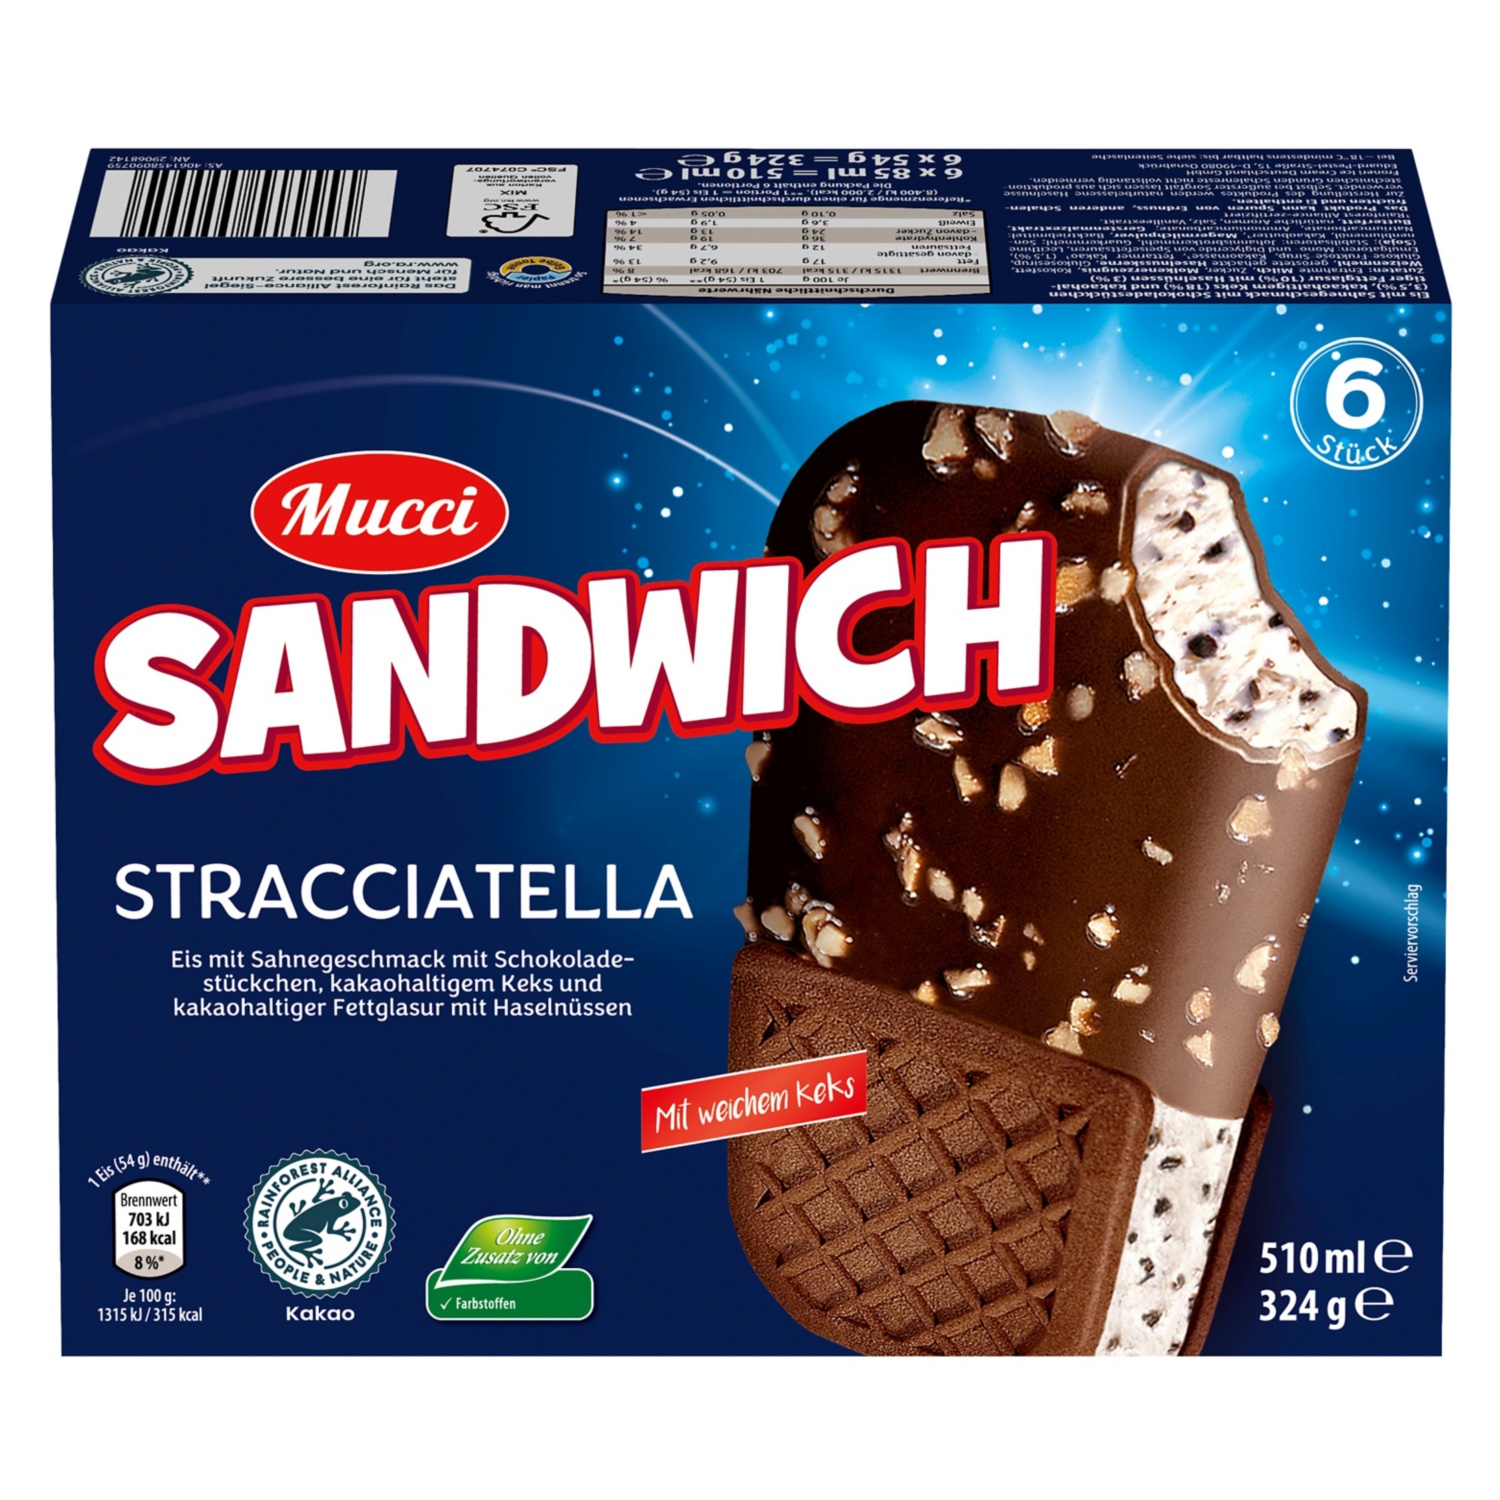 Mucci Sandwich 510 ml